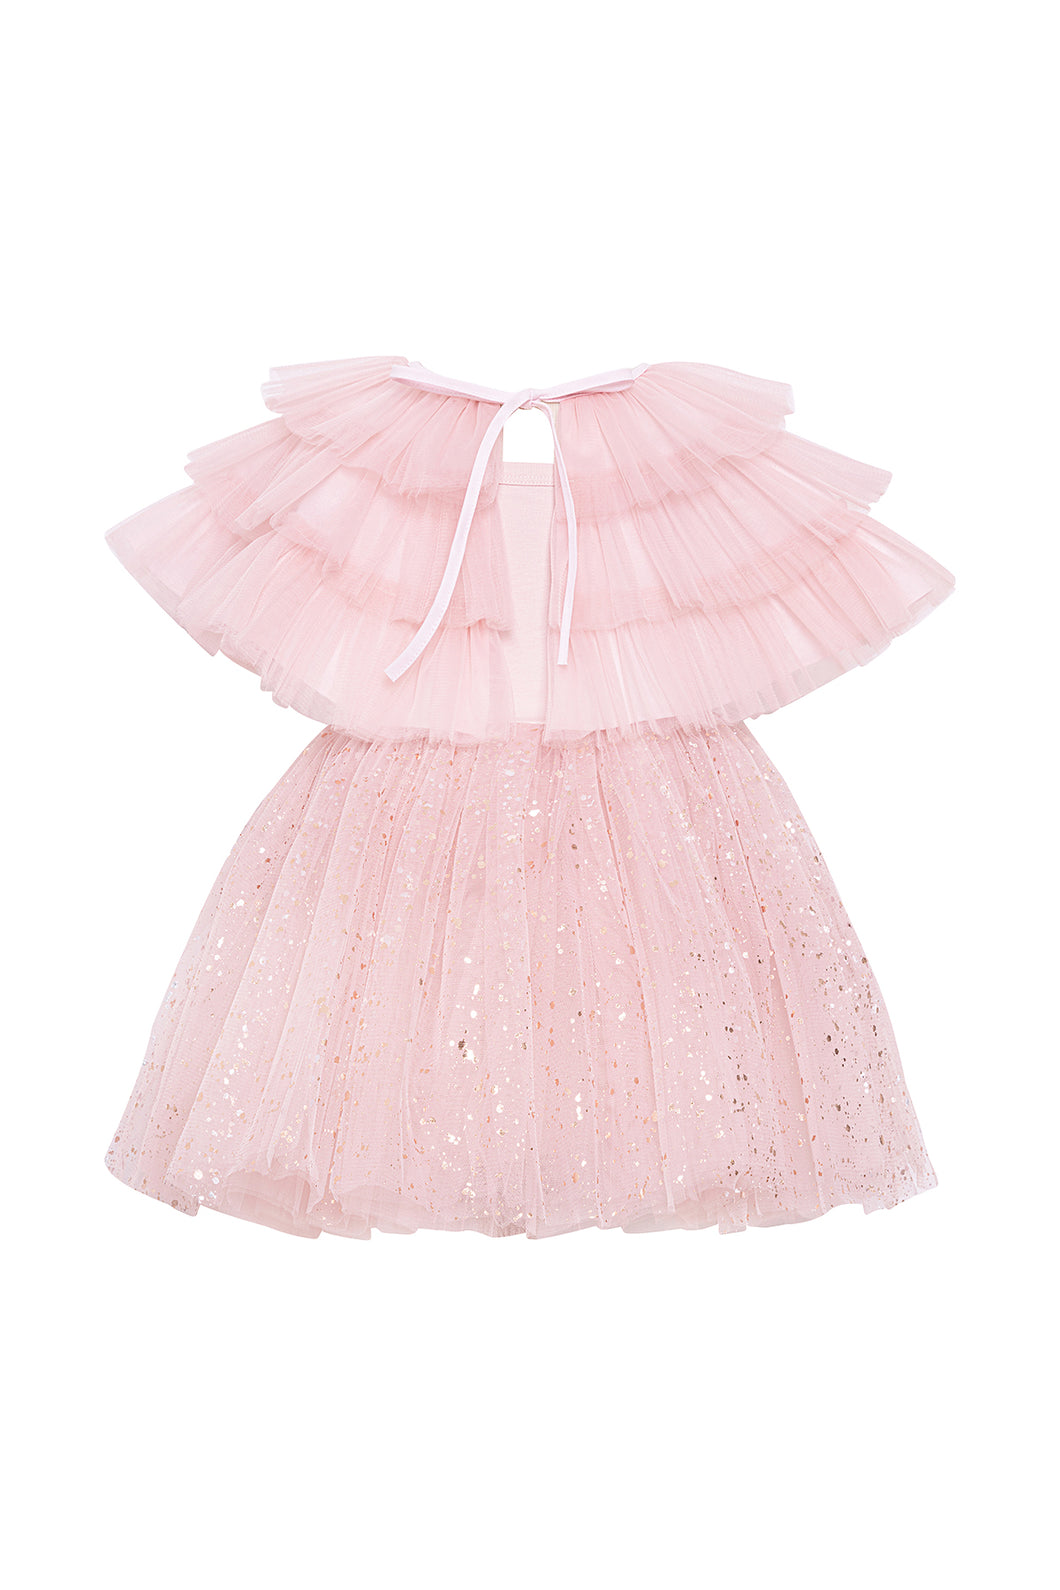 Sparkle Pink Dress Set